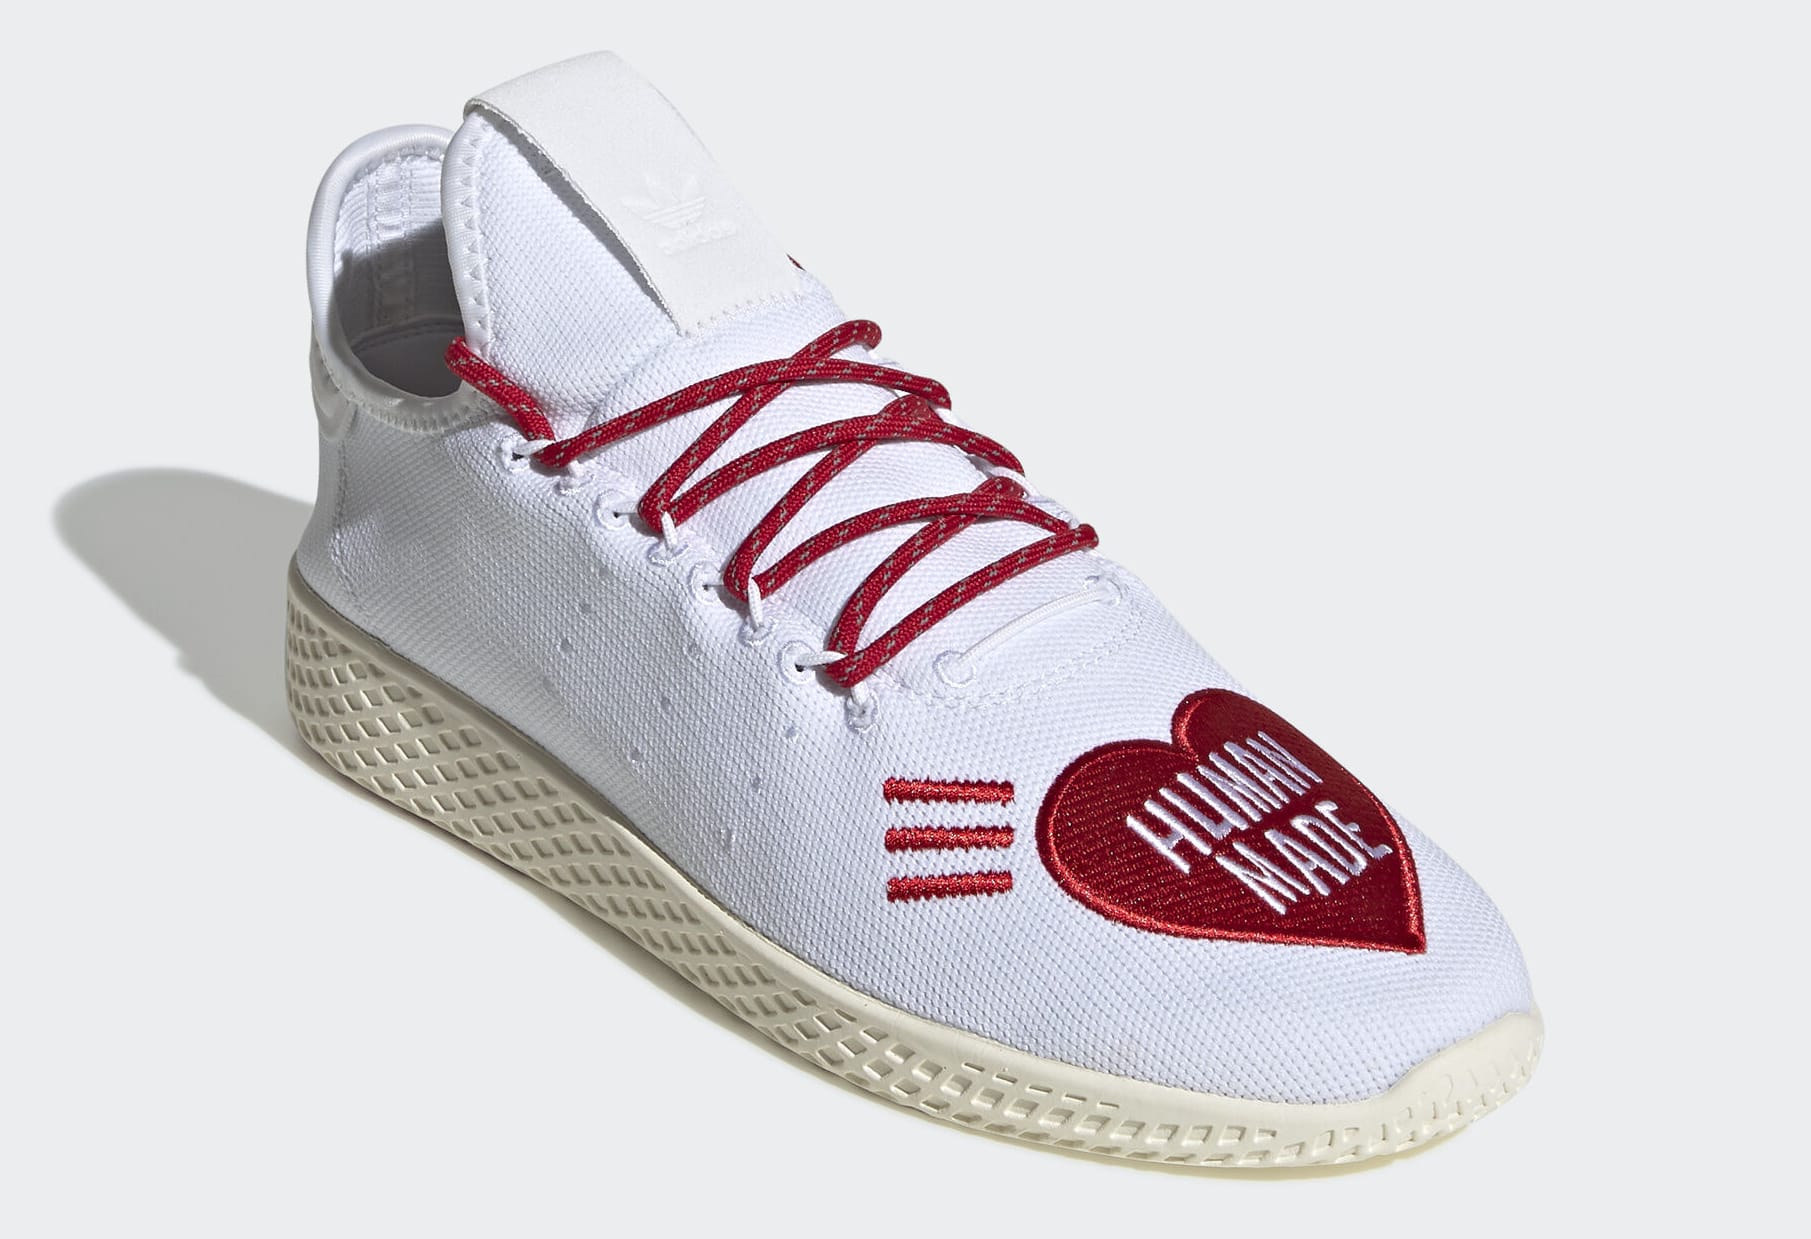 Pharrell & NIGO's HUMAN MADE x adidas Sneakers